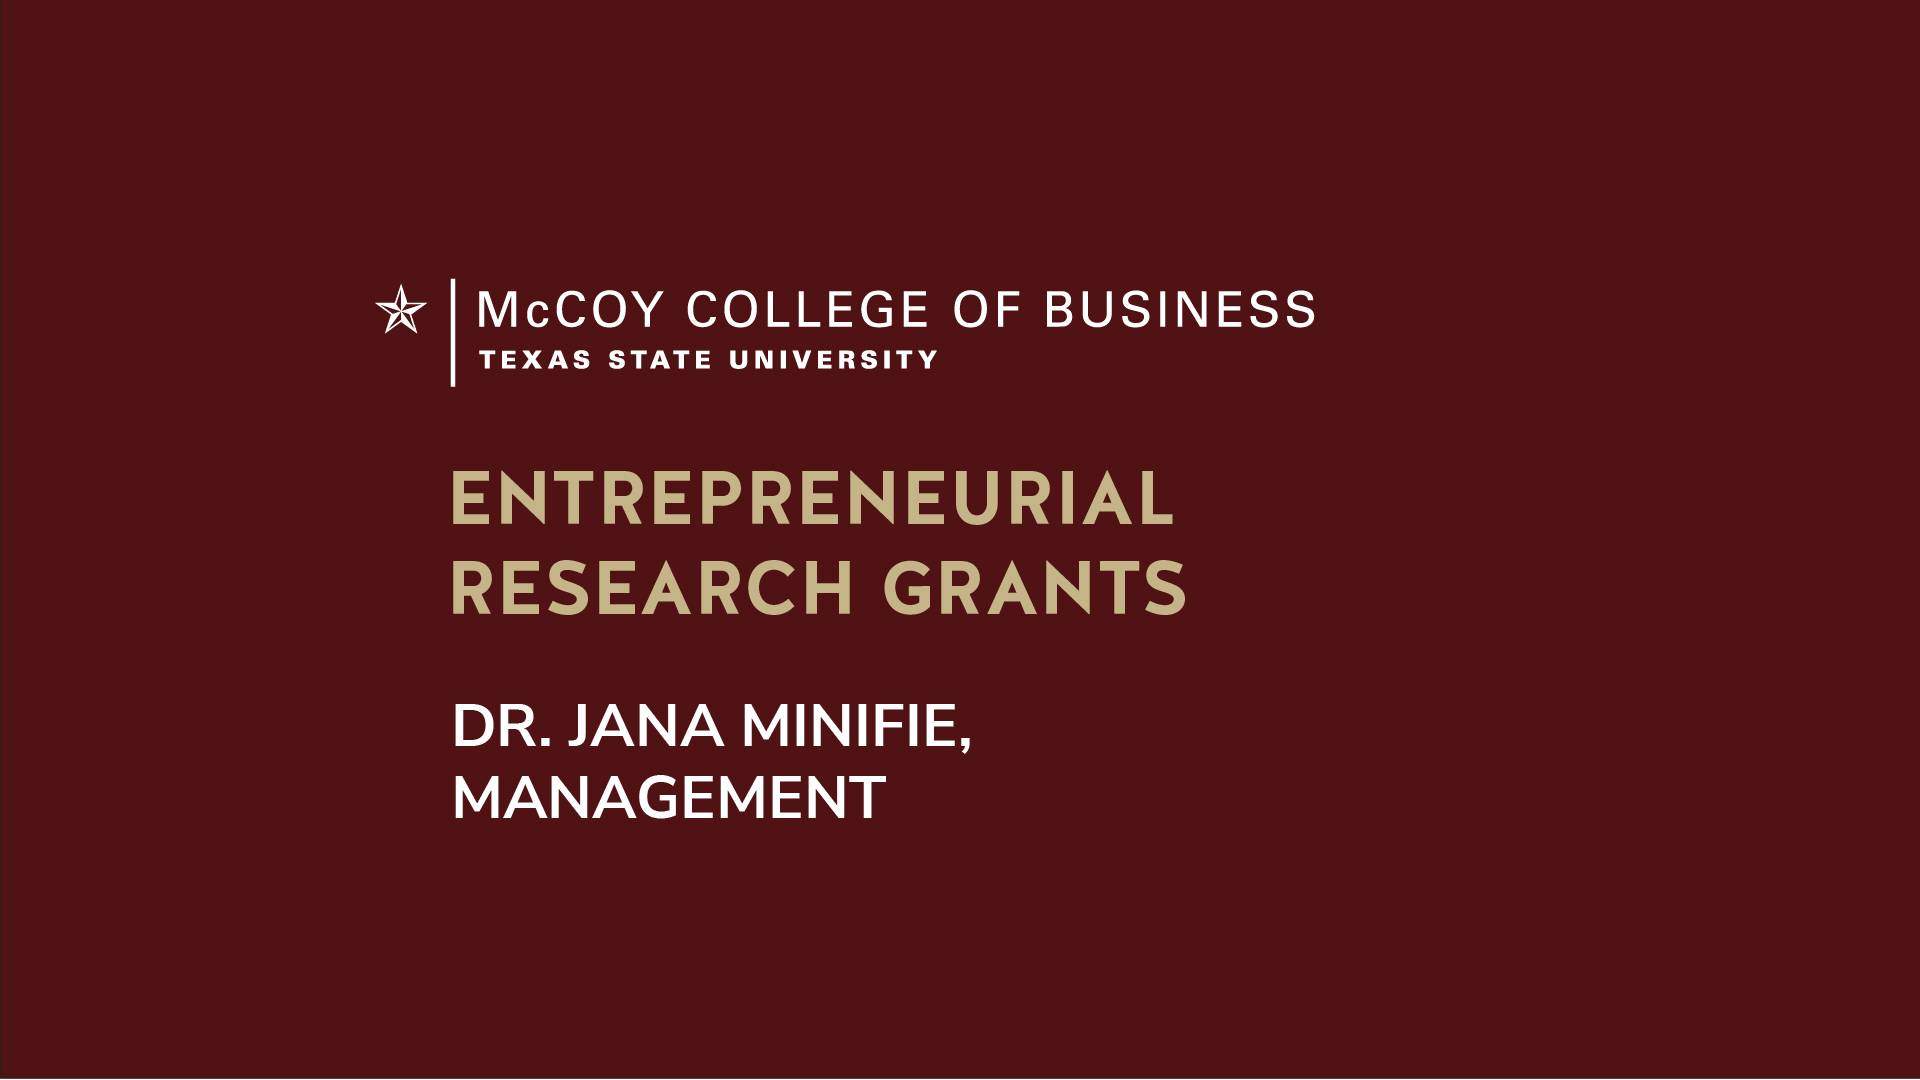 Dr. Jana Minifie discusses her entrepreneurship research grants 